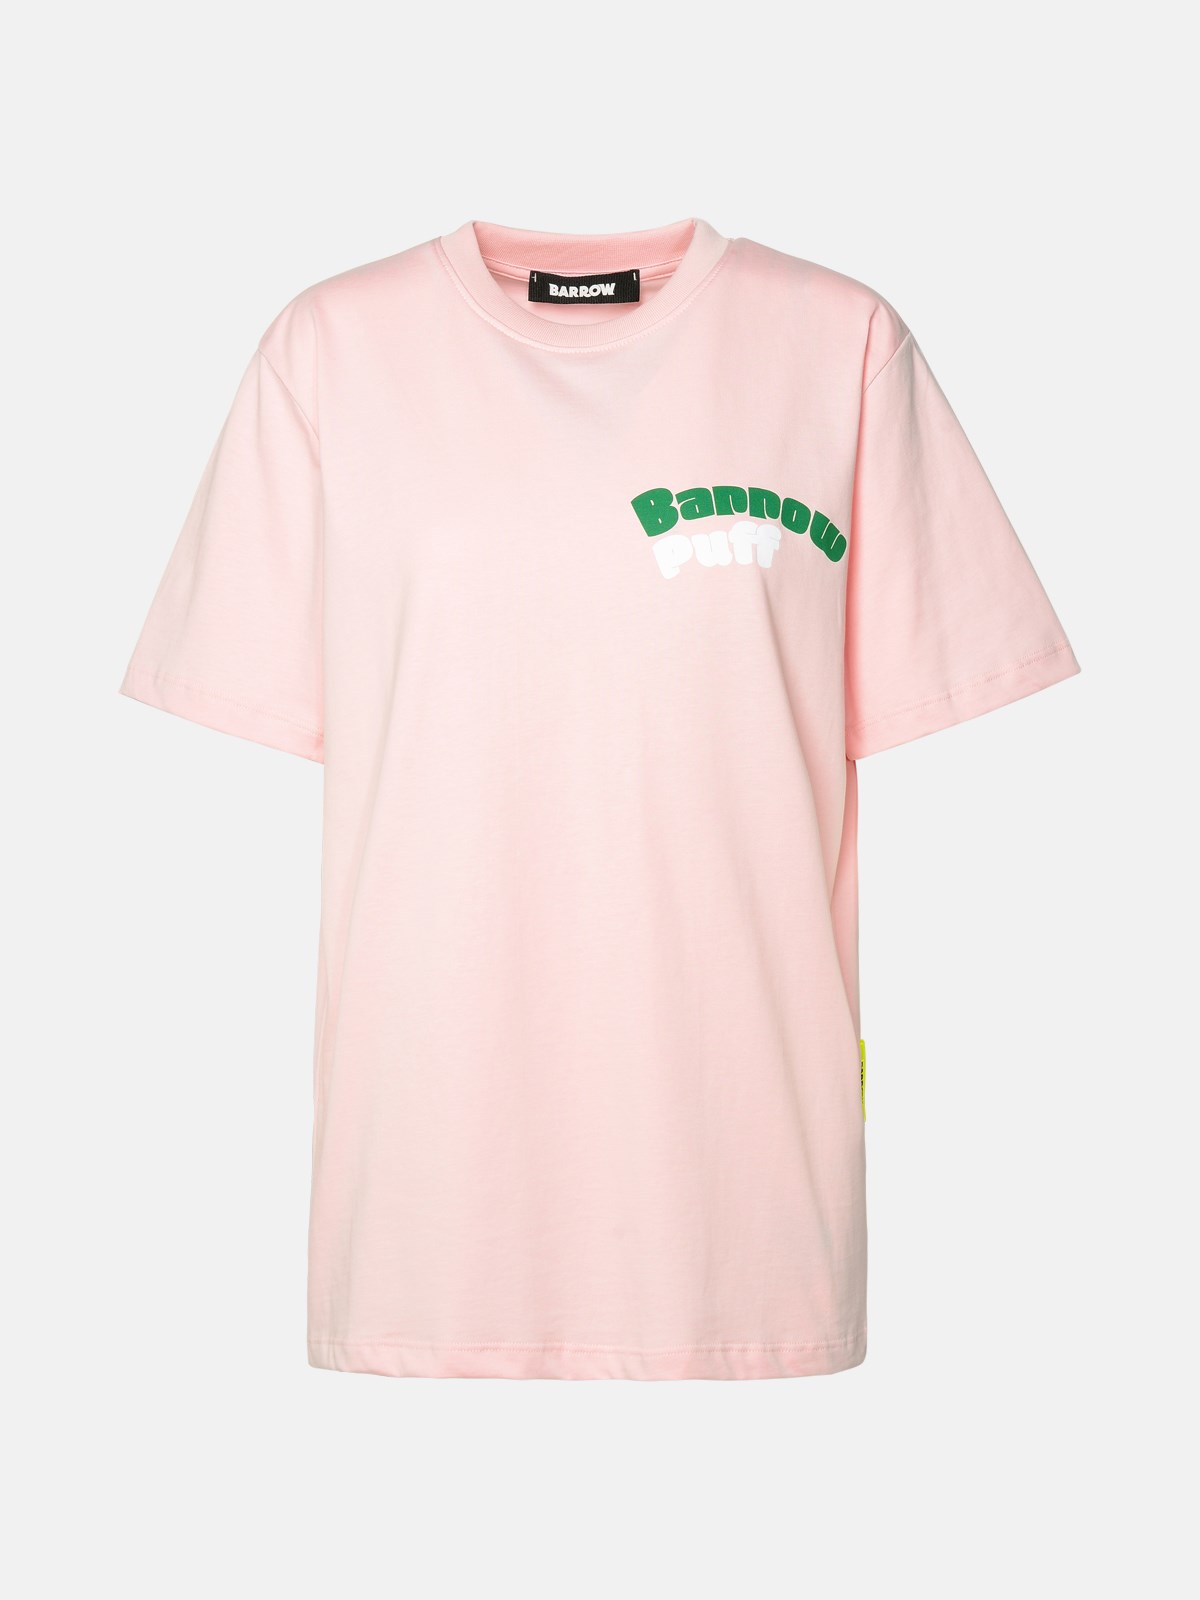 Barrow Pink Cotton T-shirt